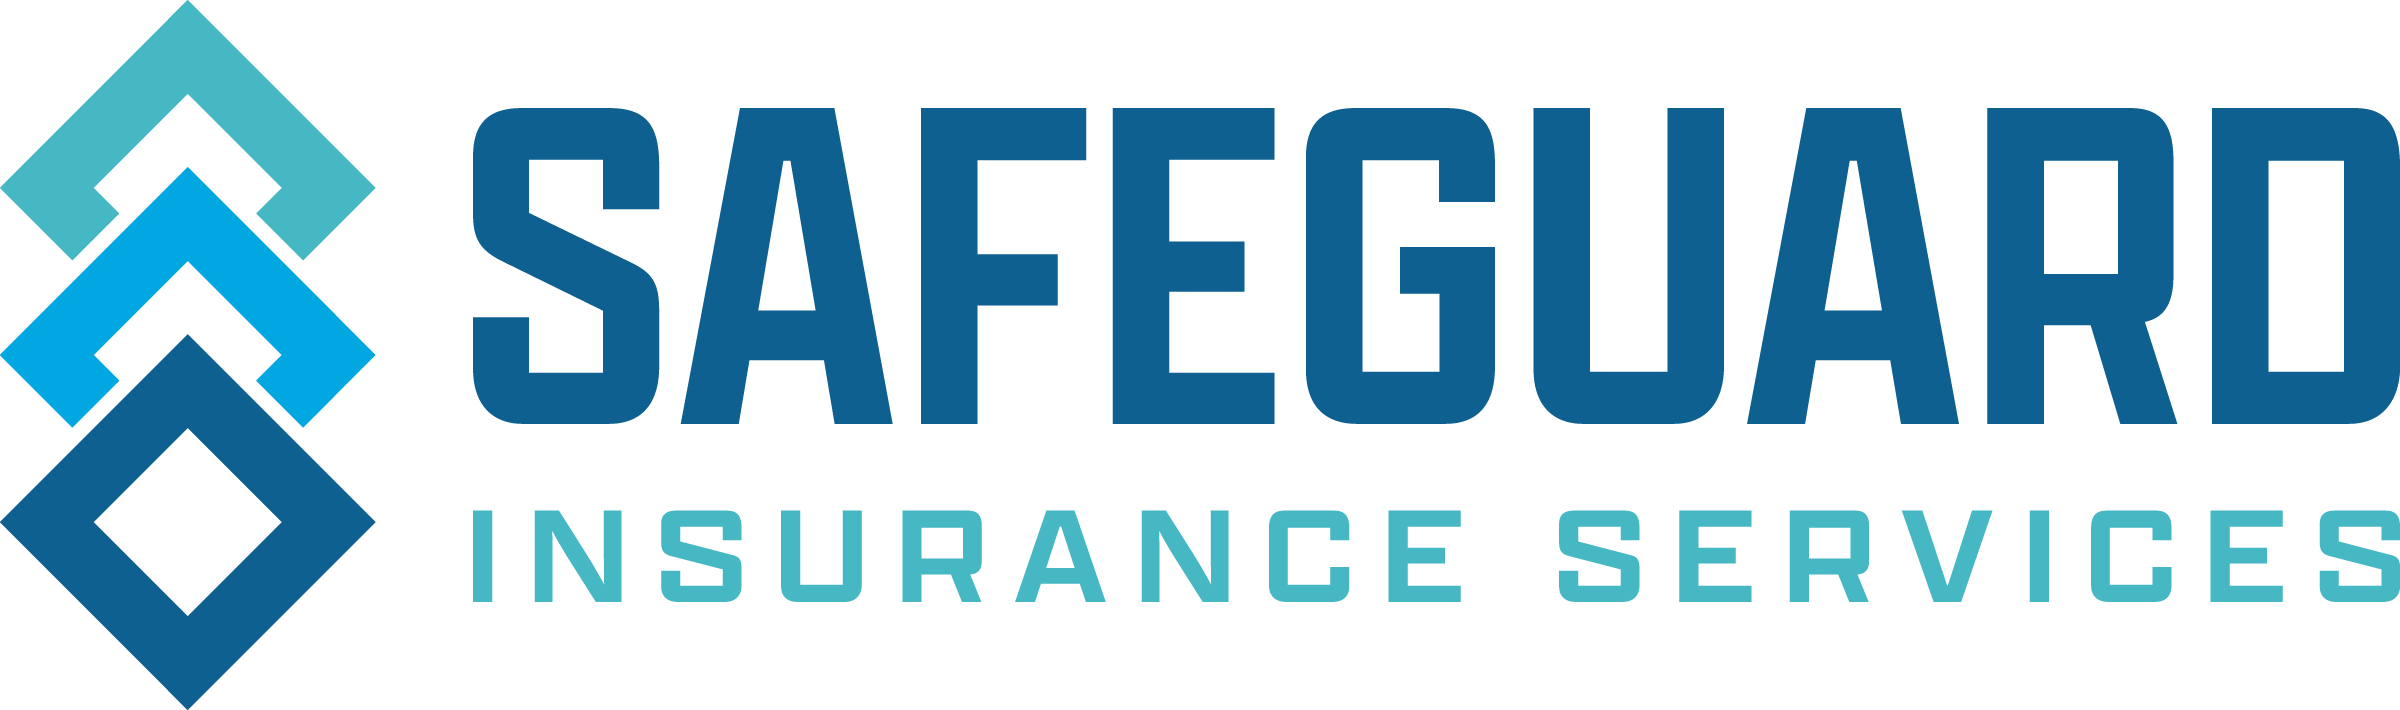 Safeguard Insurance Services logo